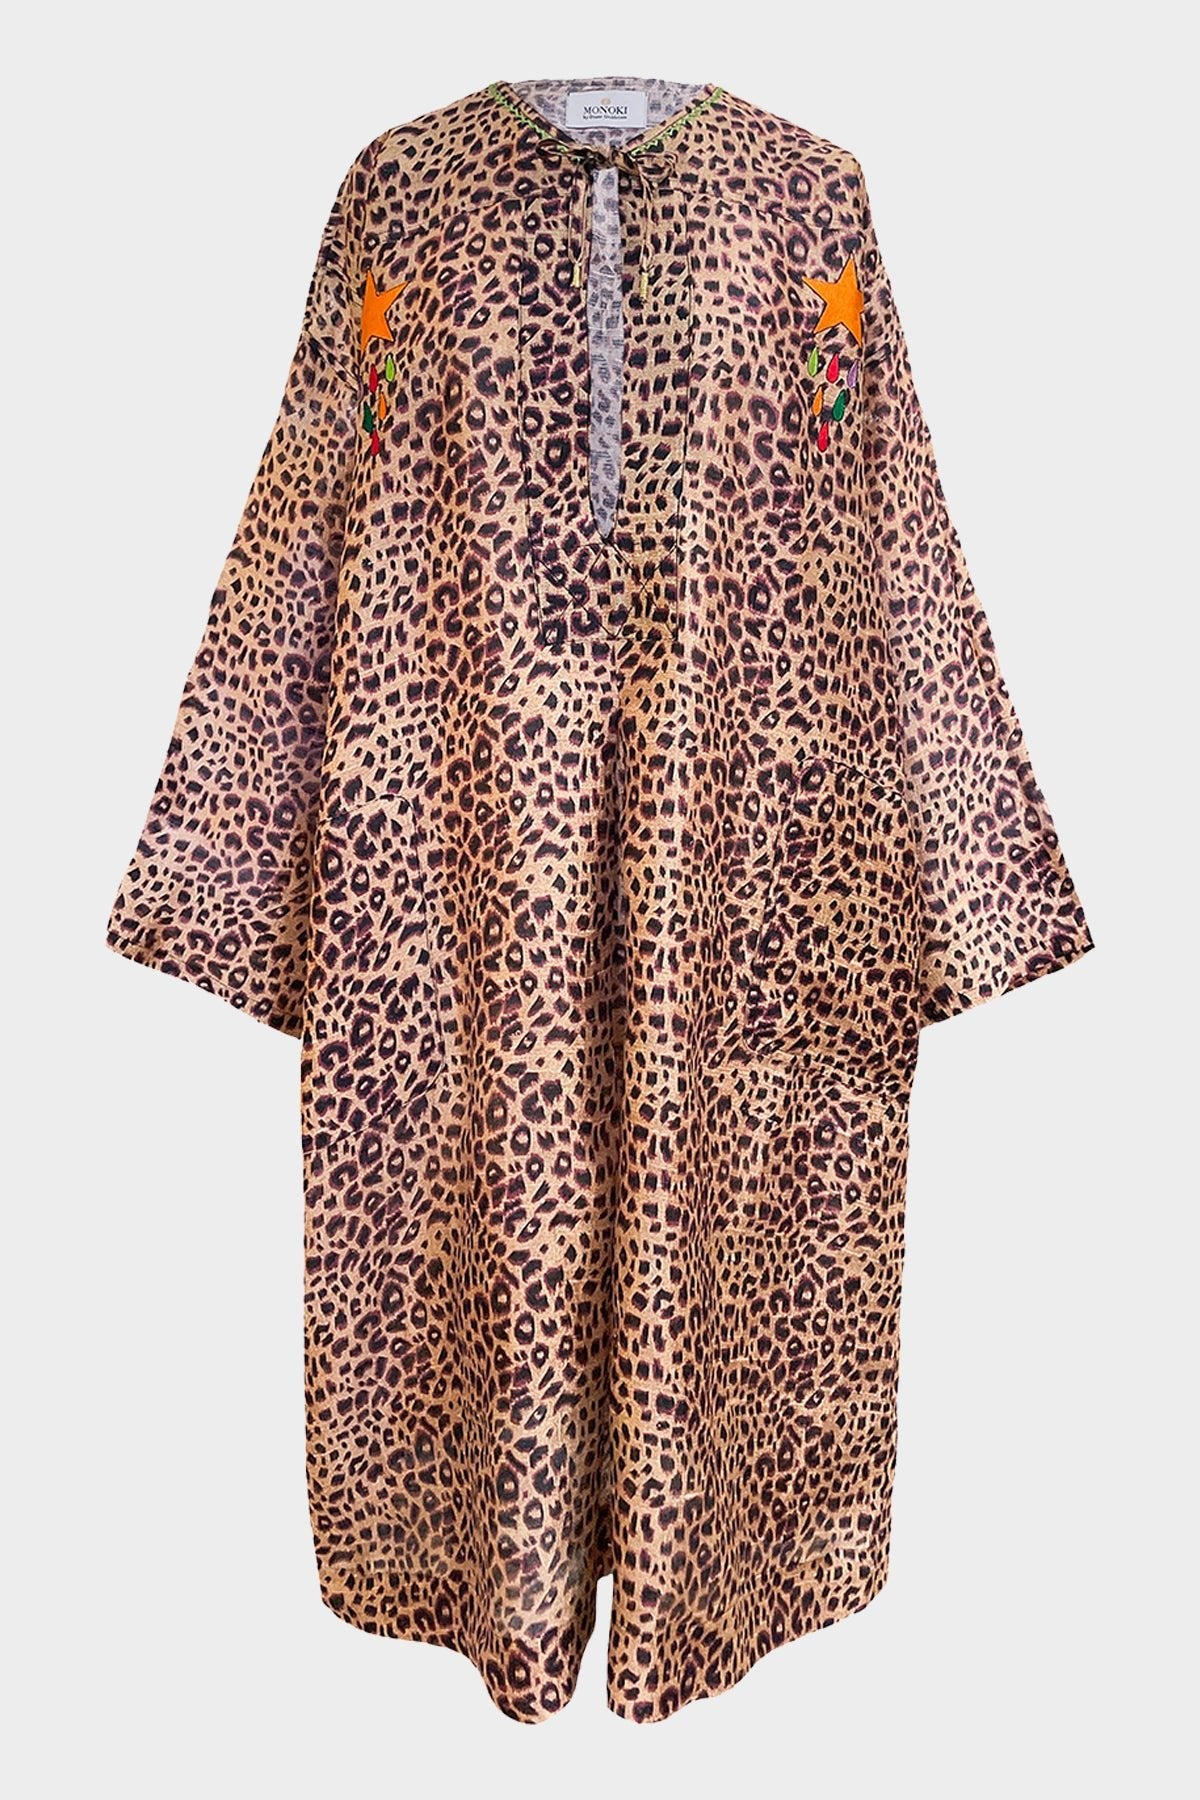 Leo Dress in Leopard - shop-olivia.com